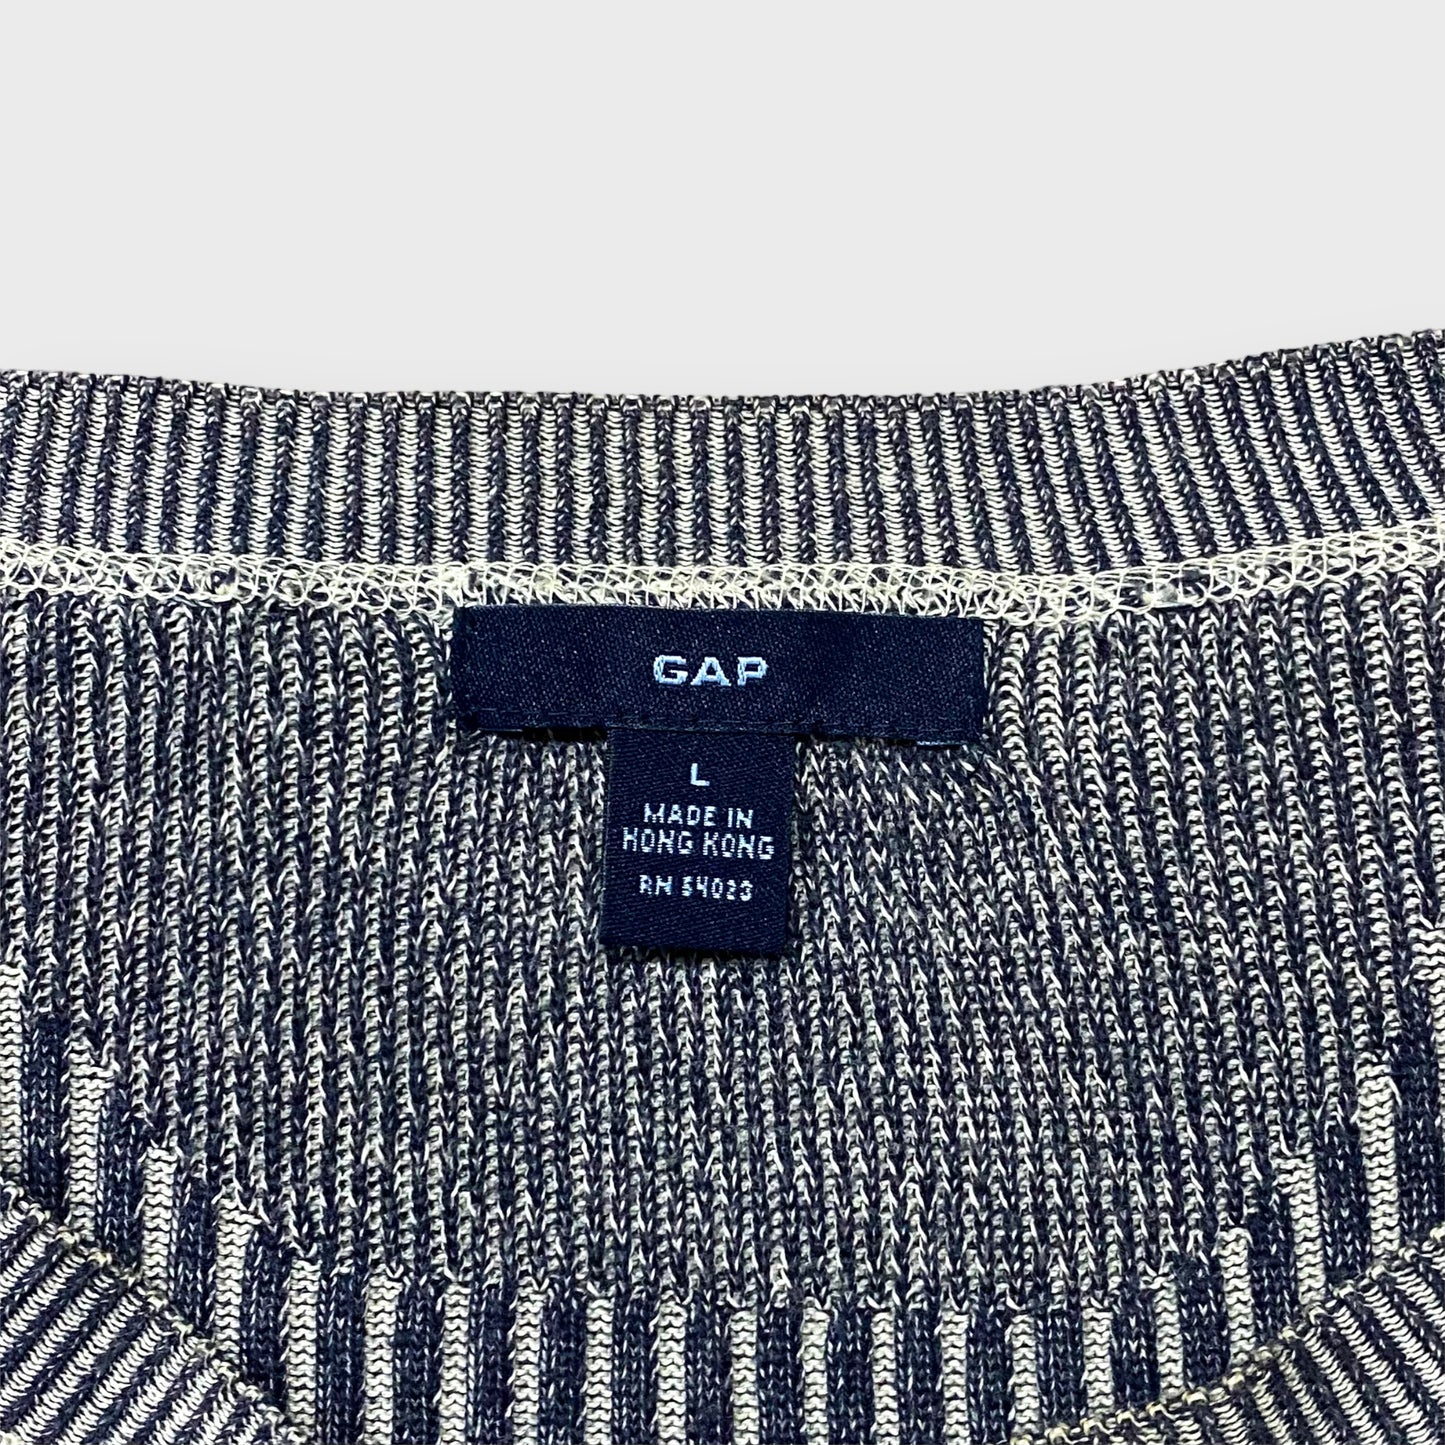 00's "GAP" ridge knitting sweater